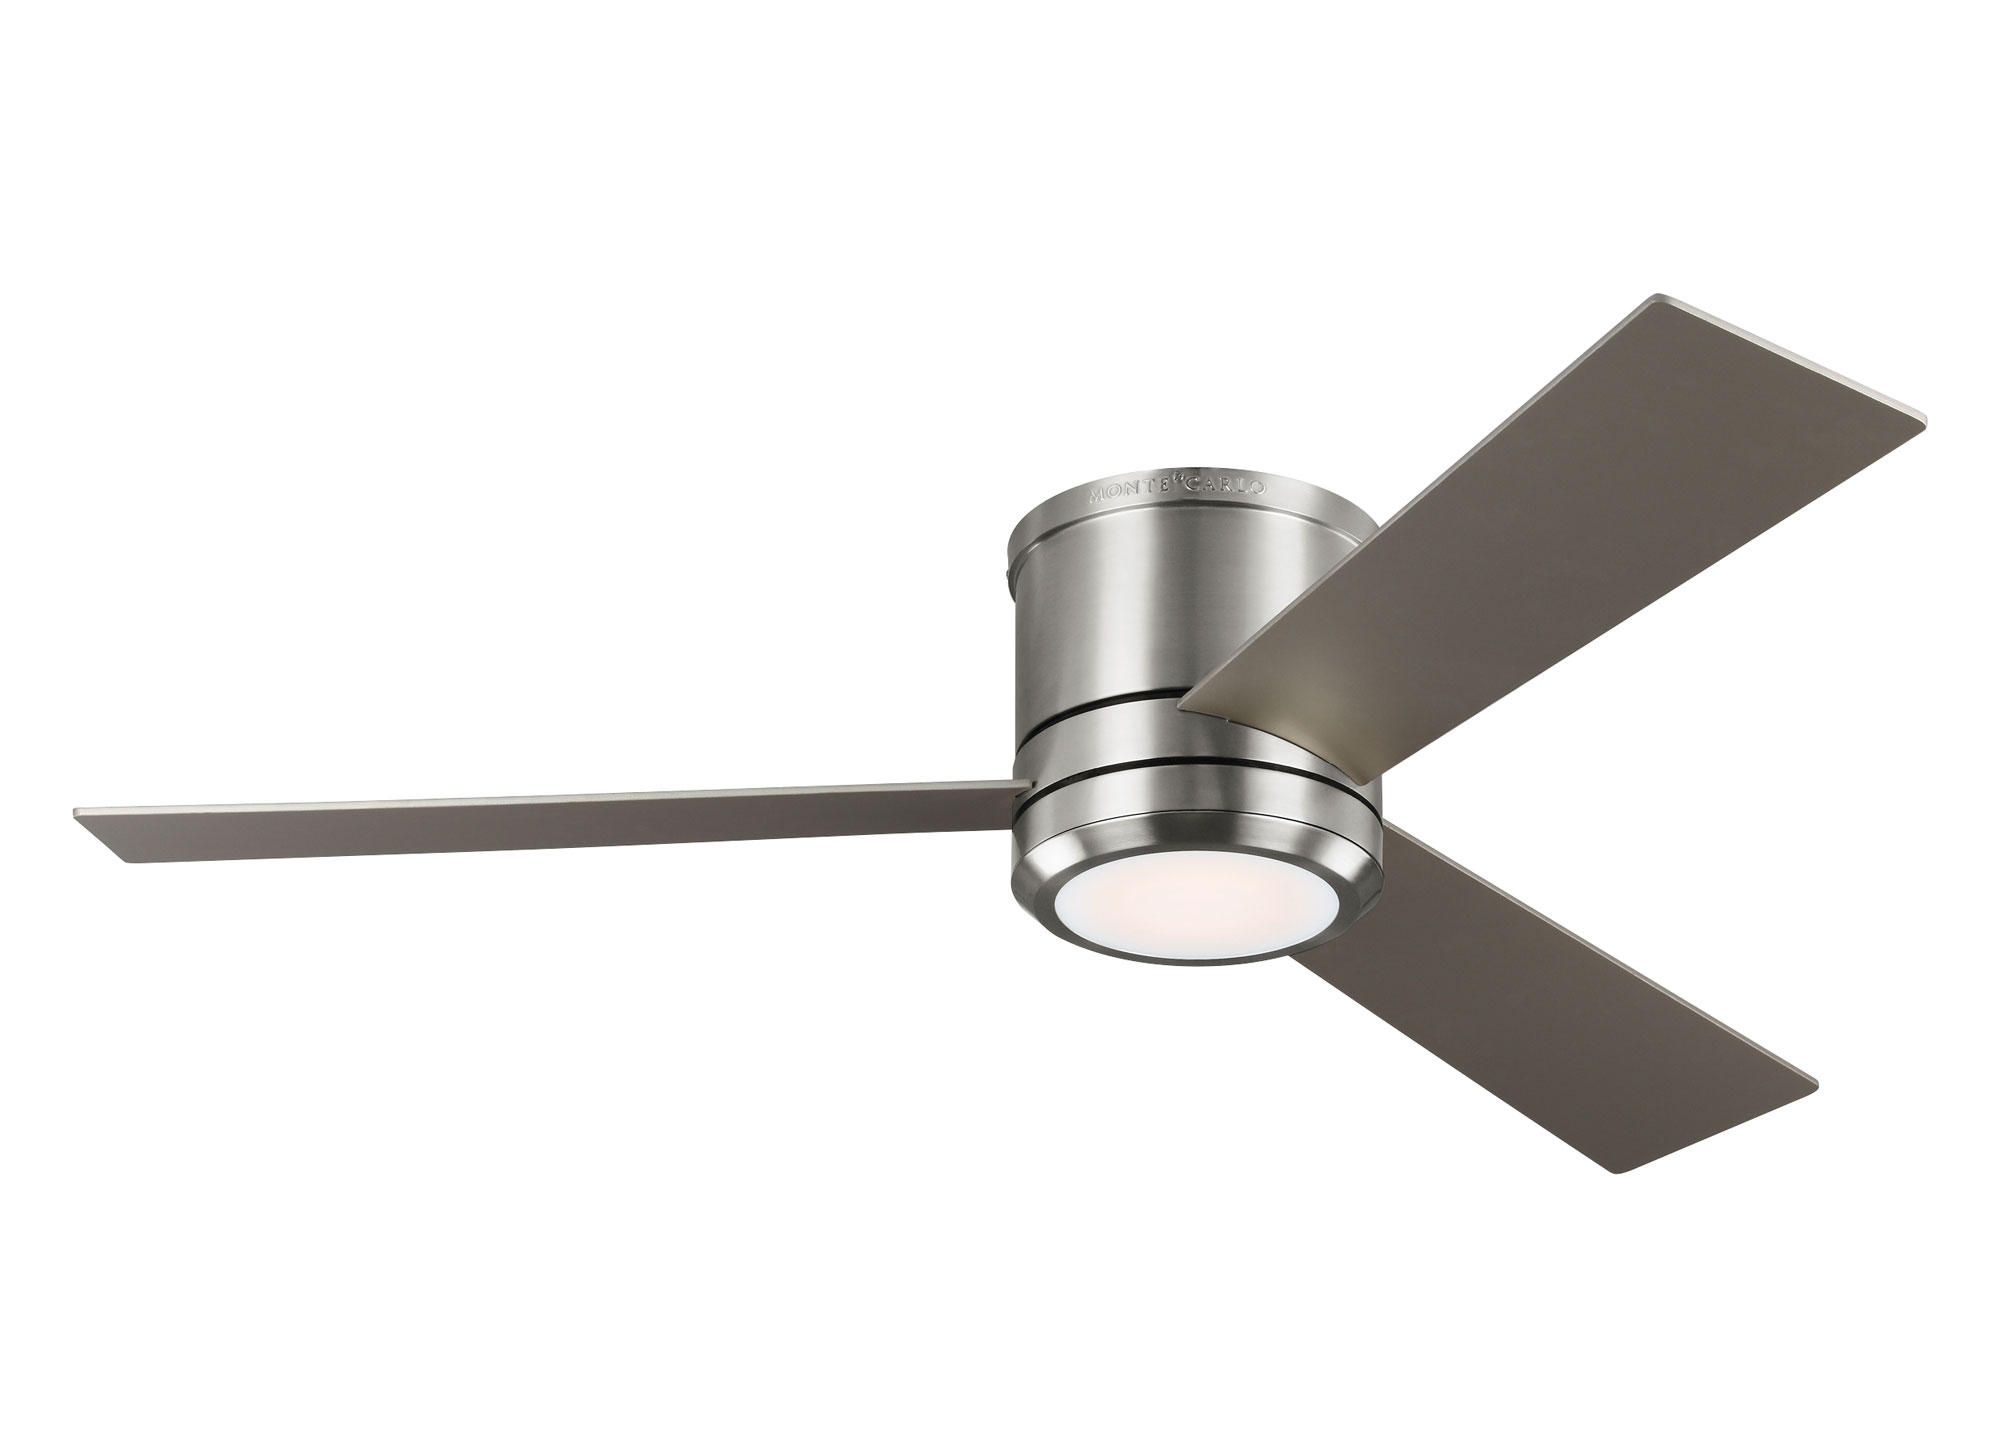 Modern Ceiling Fans With Led Lightsmodern ceiling fans ceiling fan with light